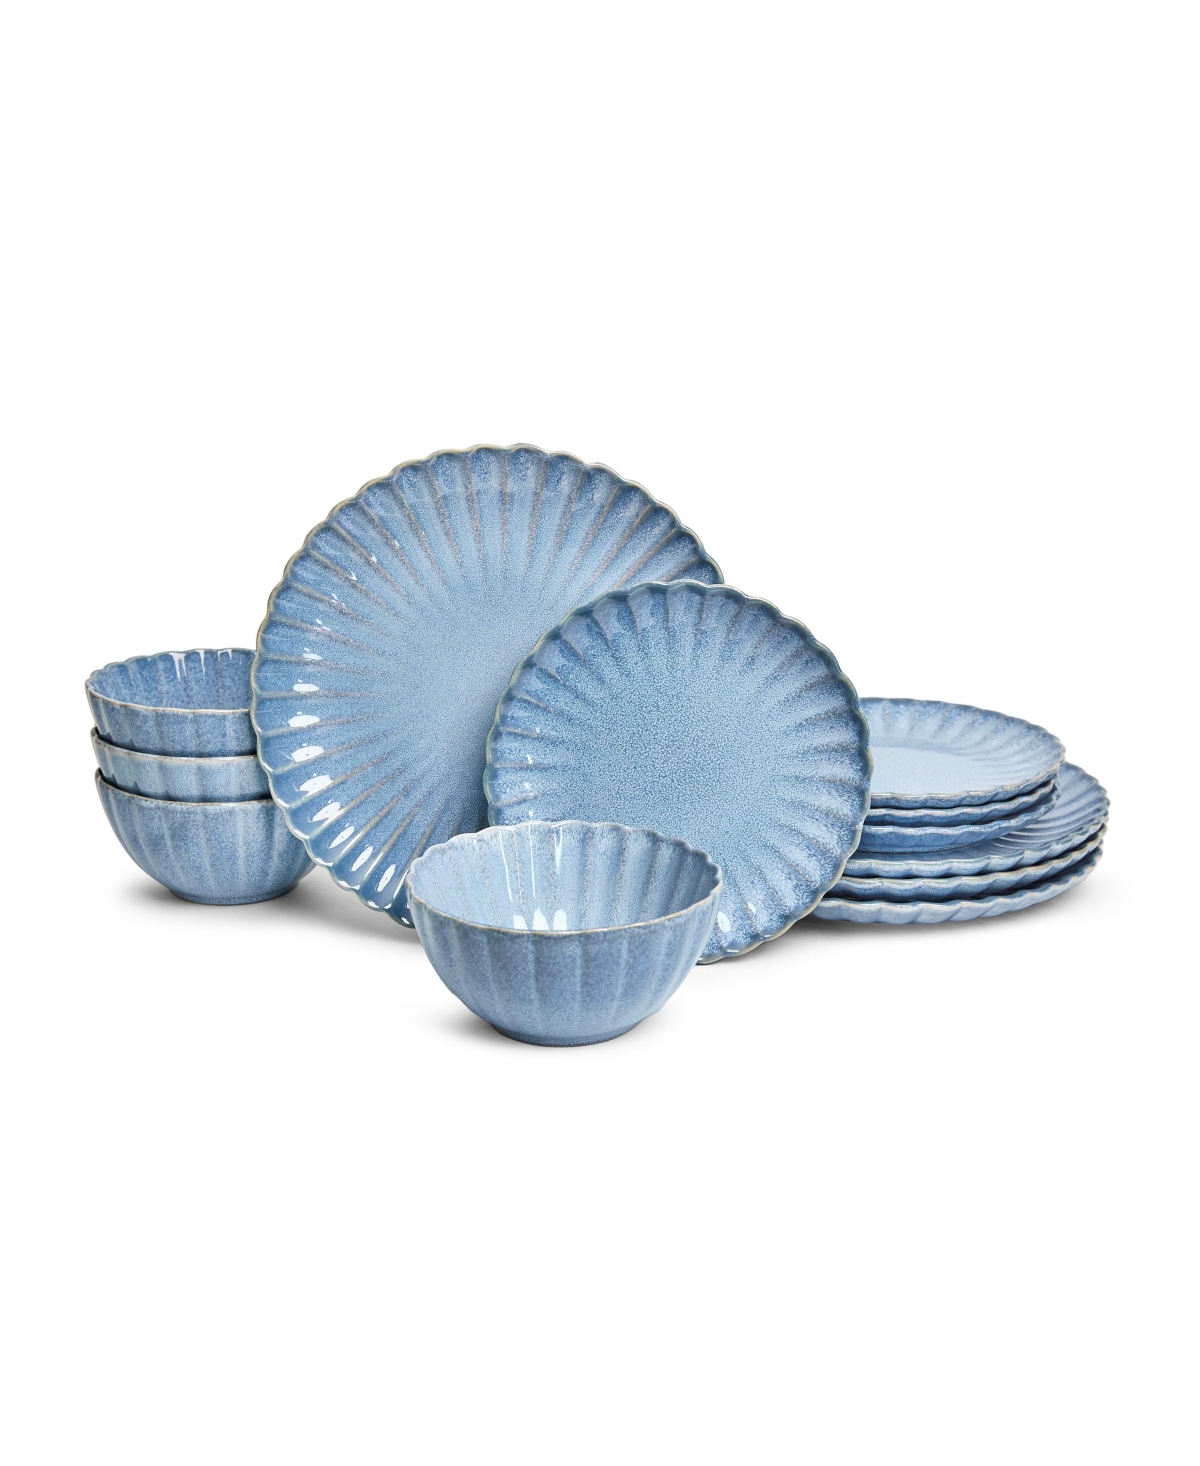 Frill Reactive Stoneware 12 Pc Dinnerware Set, Service for 4 - Blue